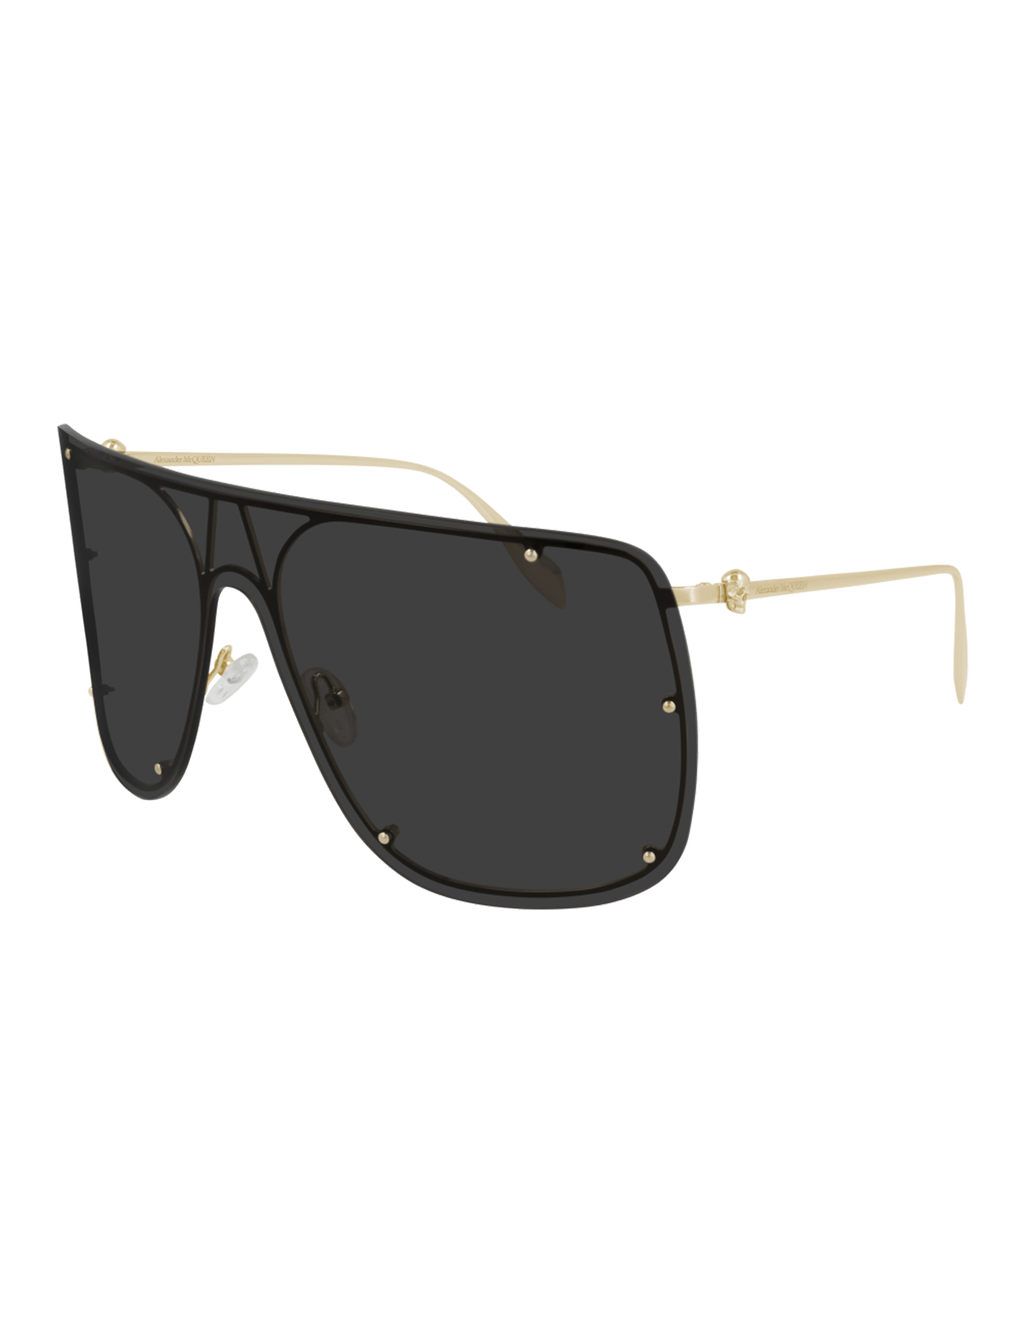 Mask Sunglasses, Gold/Grey